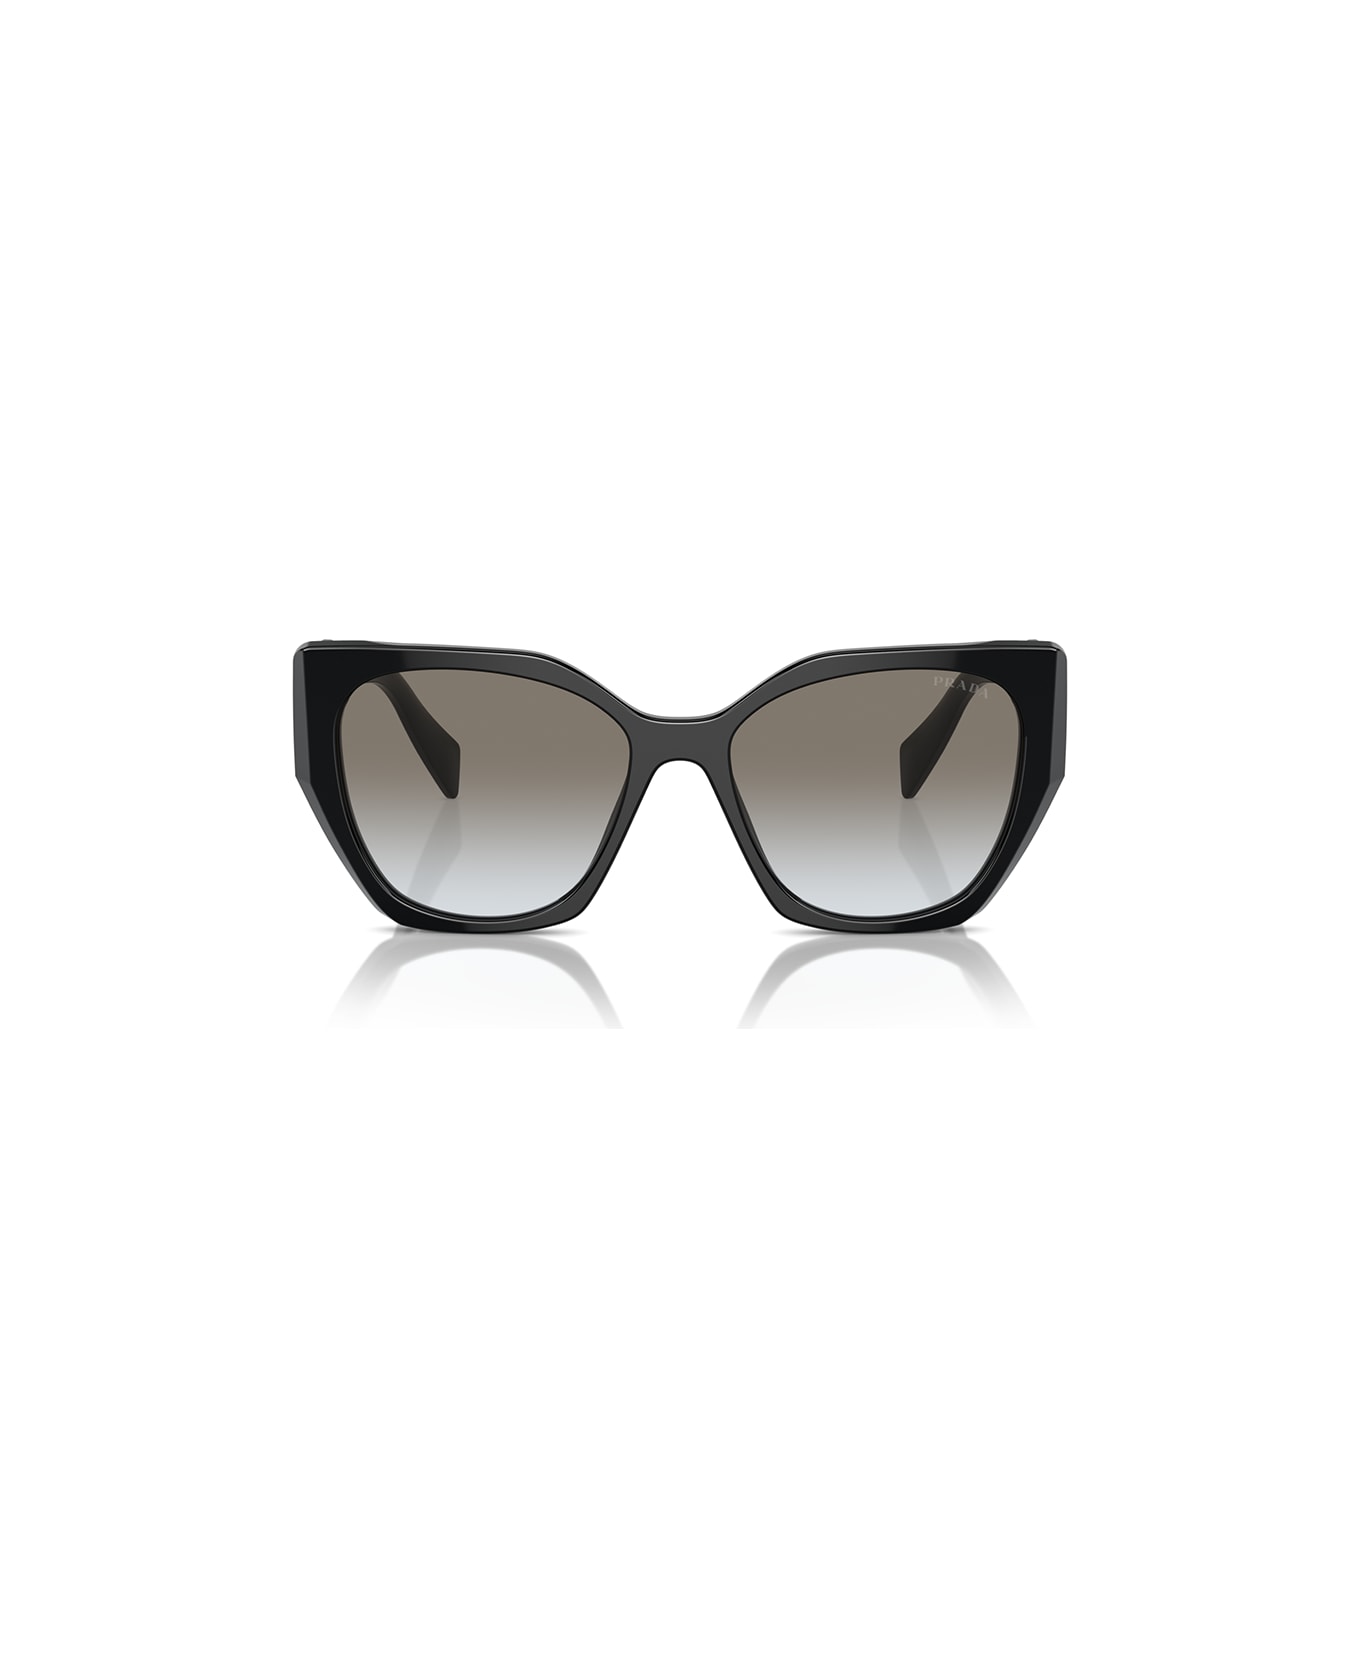 Prada Eyewear Sunglasses - Nero/Grigio